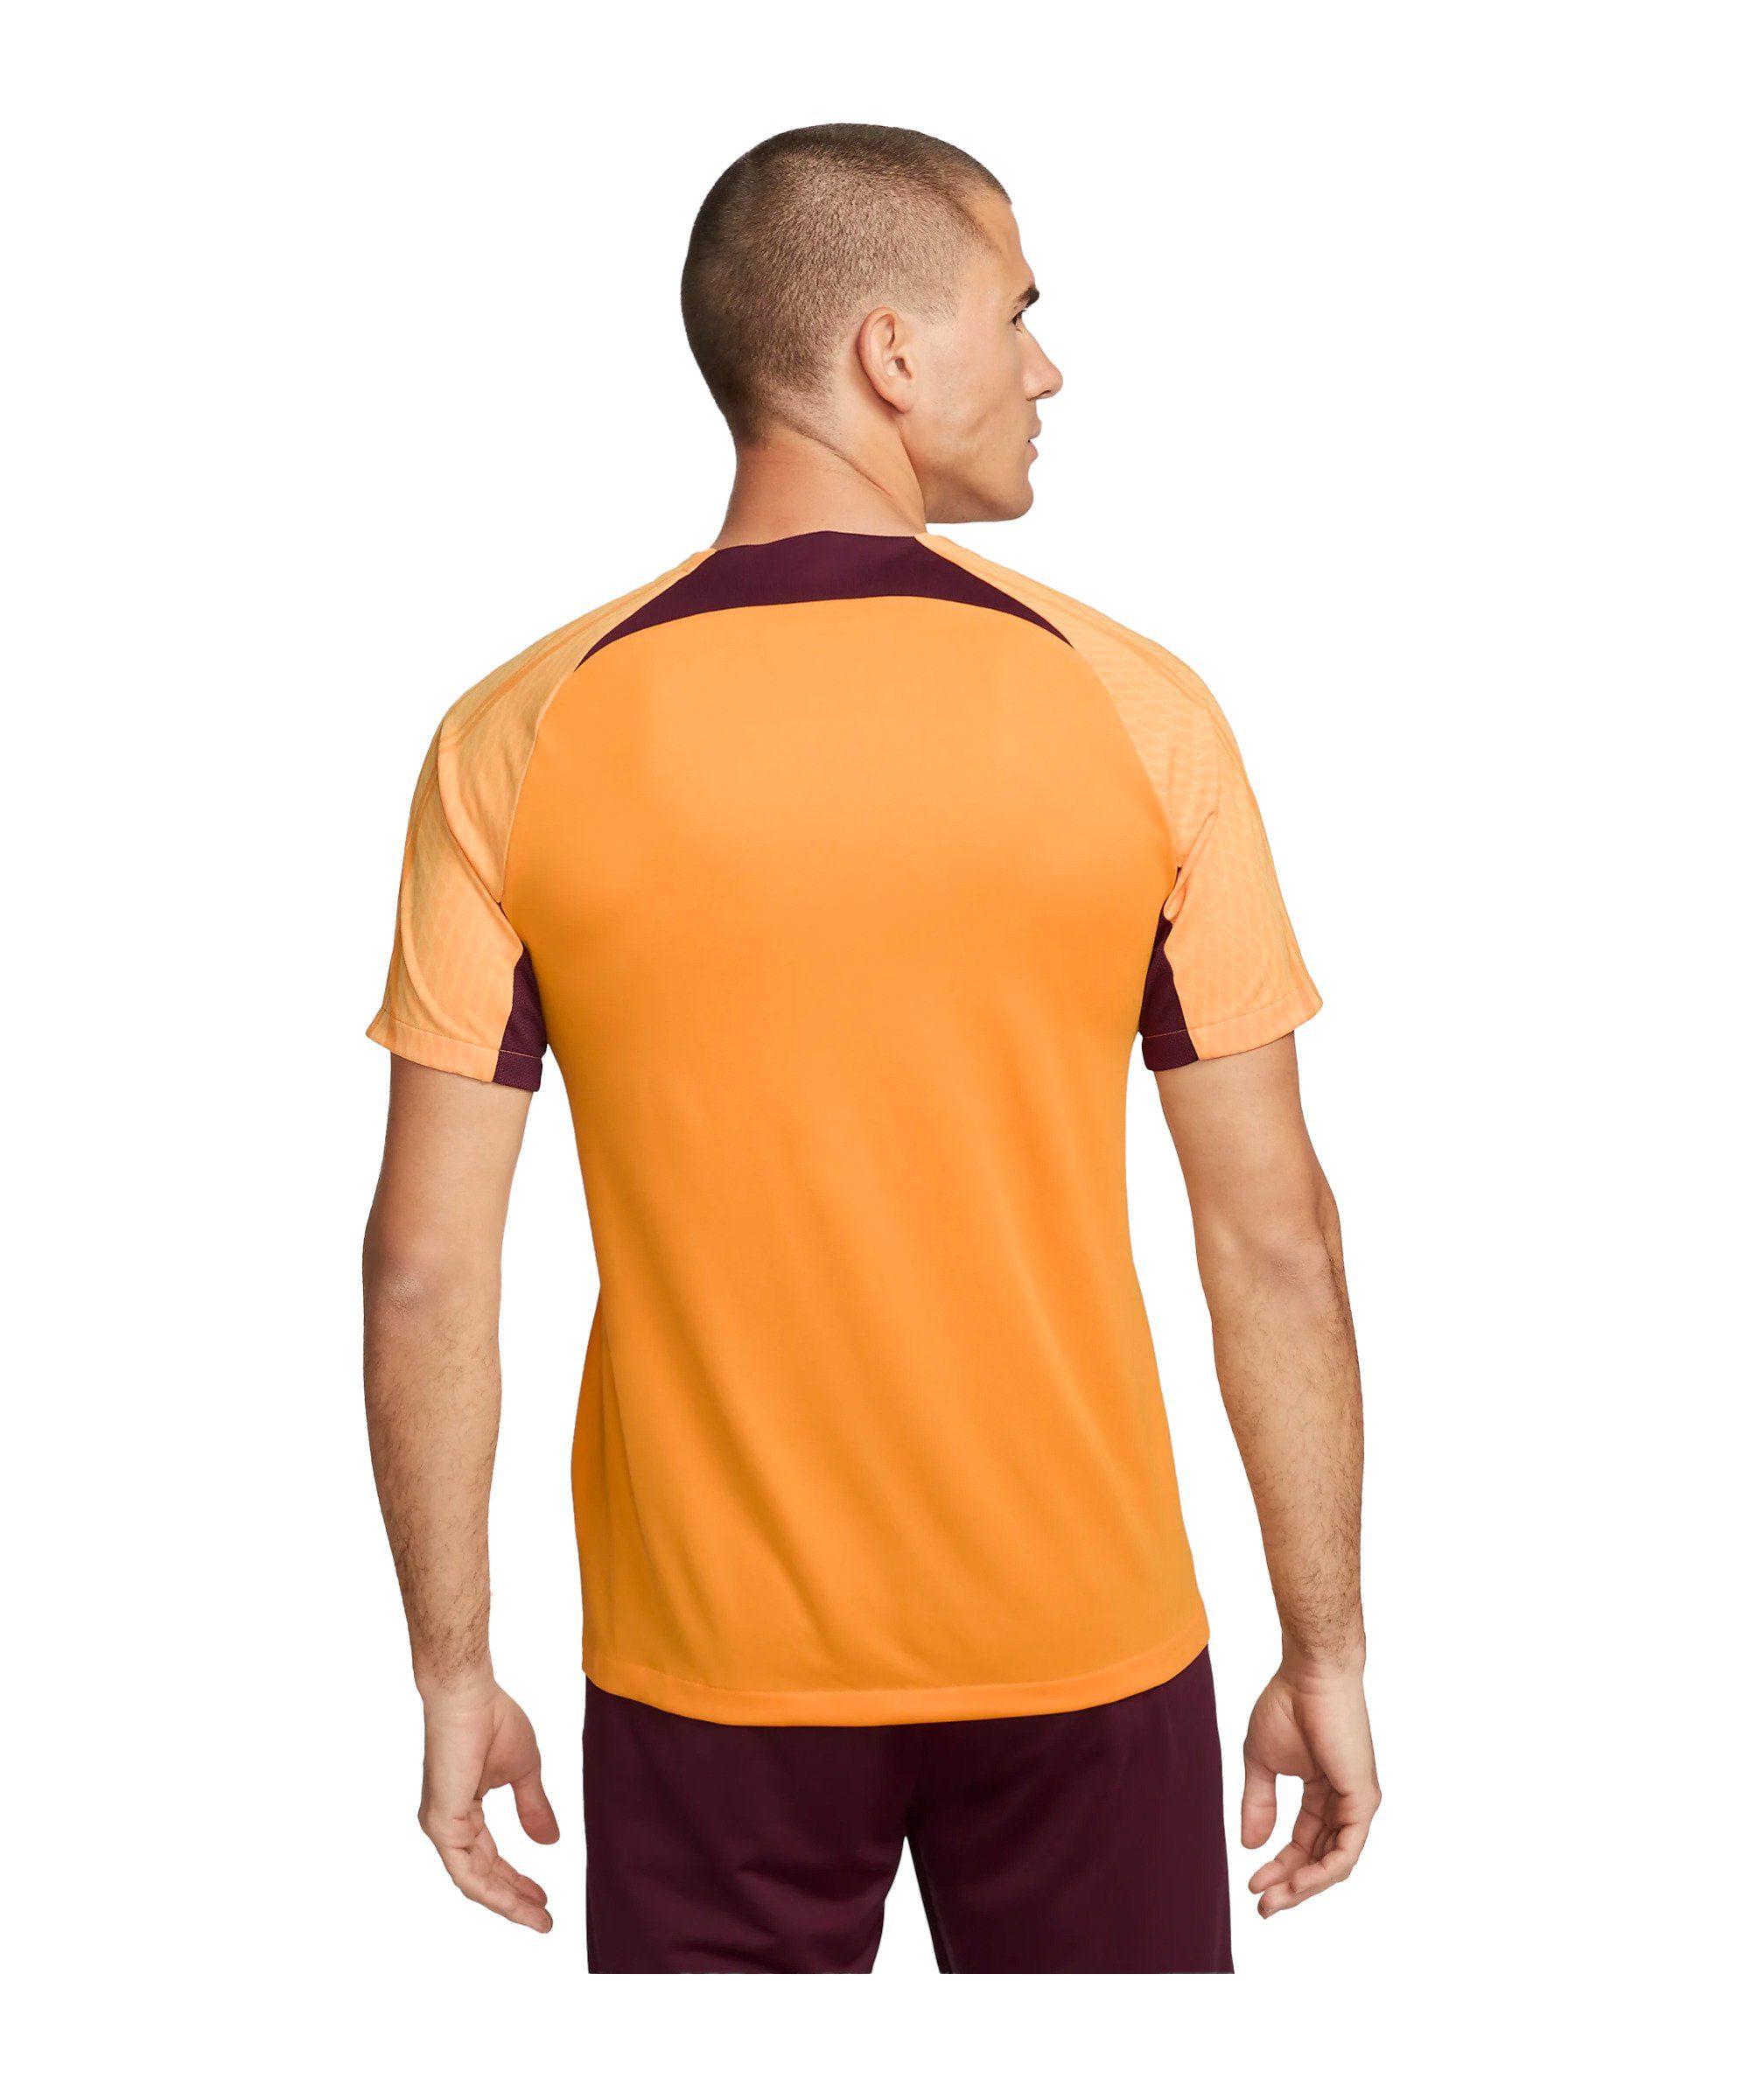 Nike T-Shirt default Galatasaray Trainingsshirt Istanbul